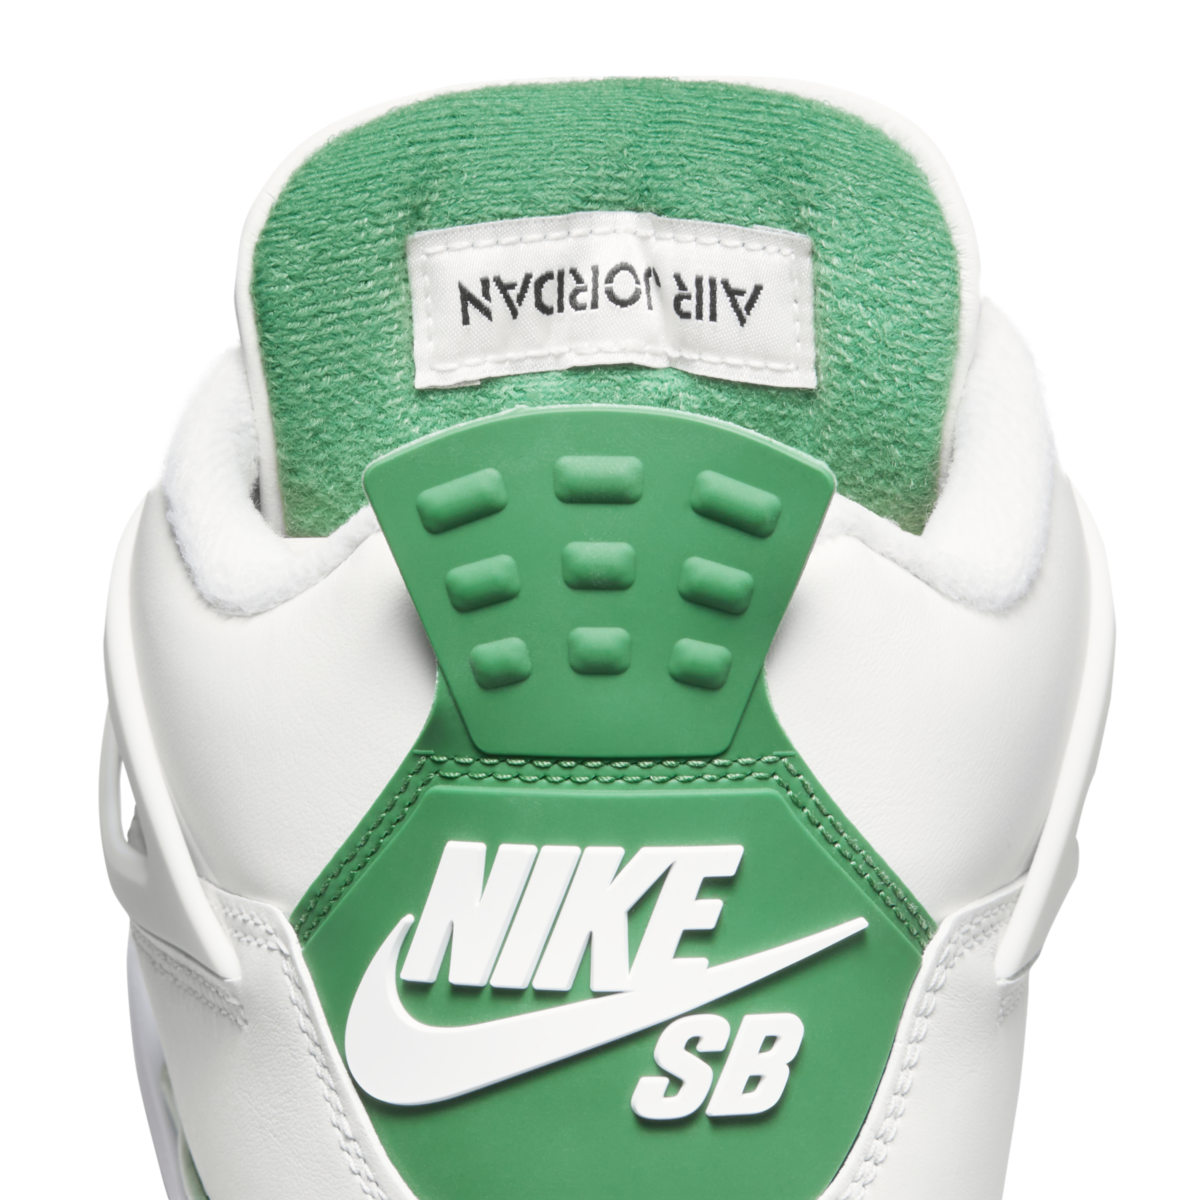 Nike SB x Air Jordan 4 'Pine Green'